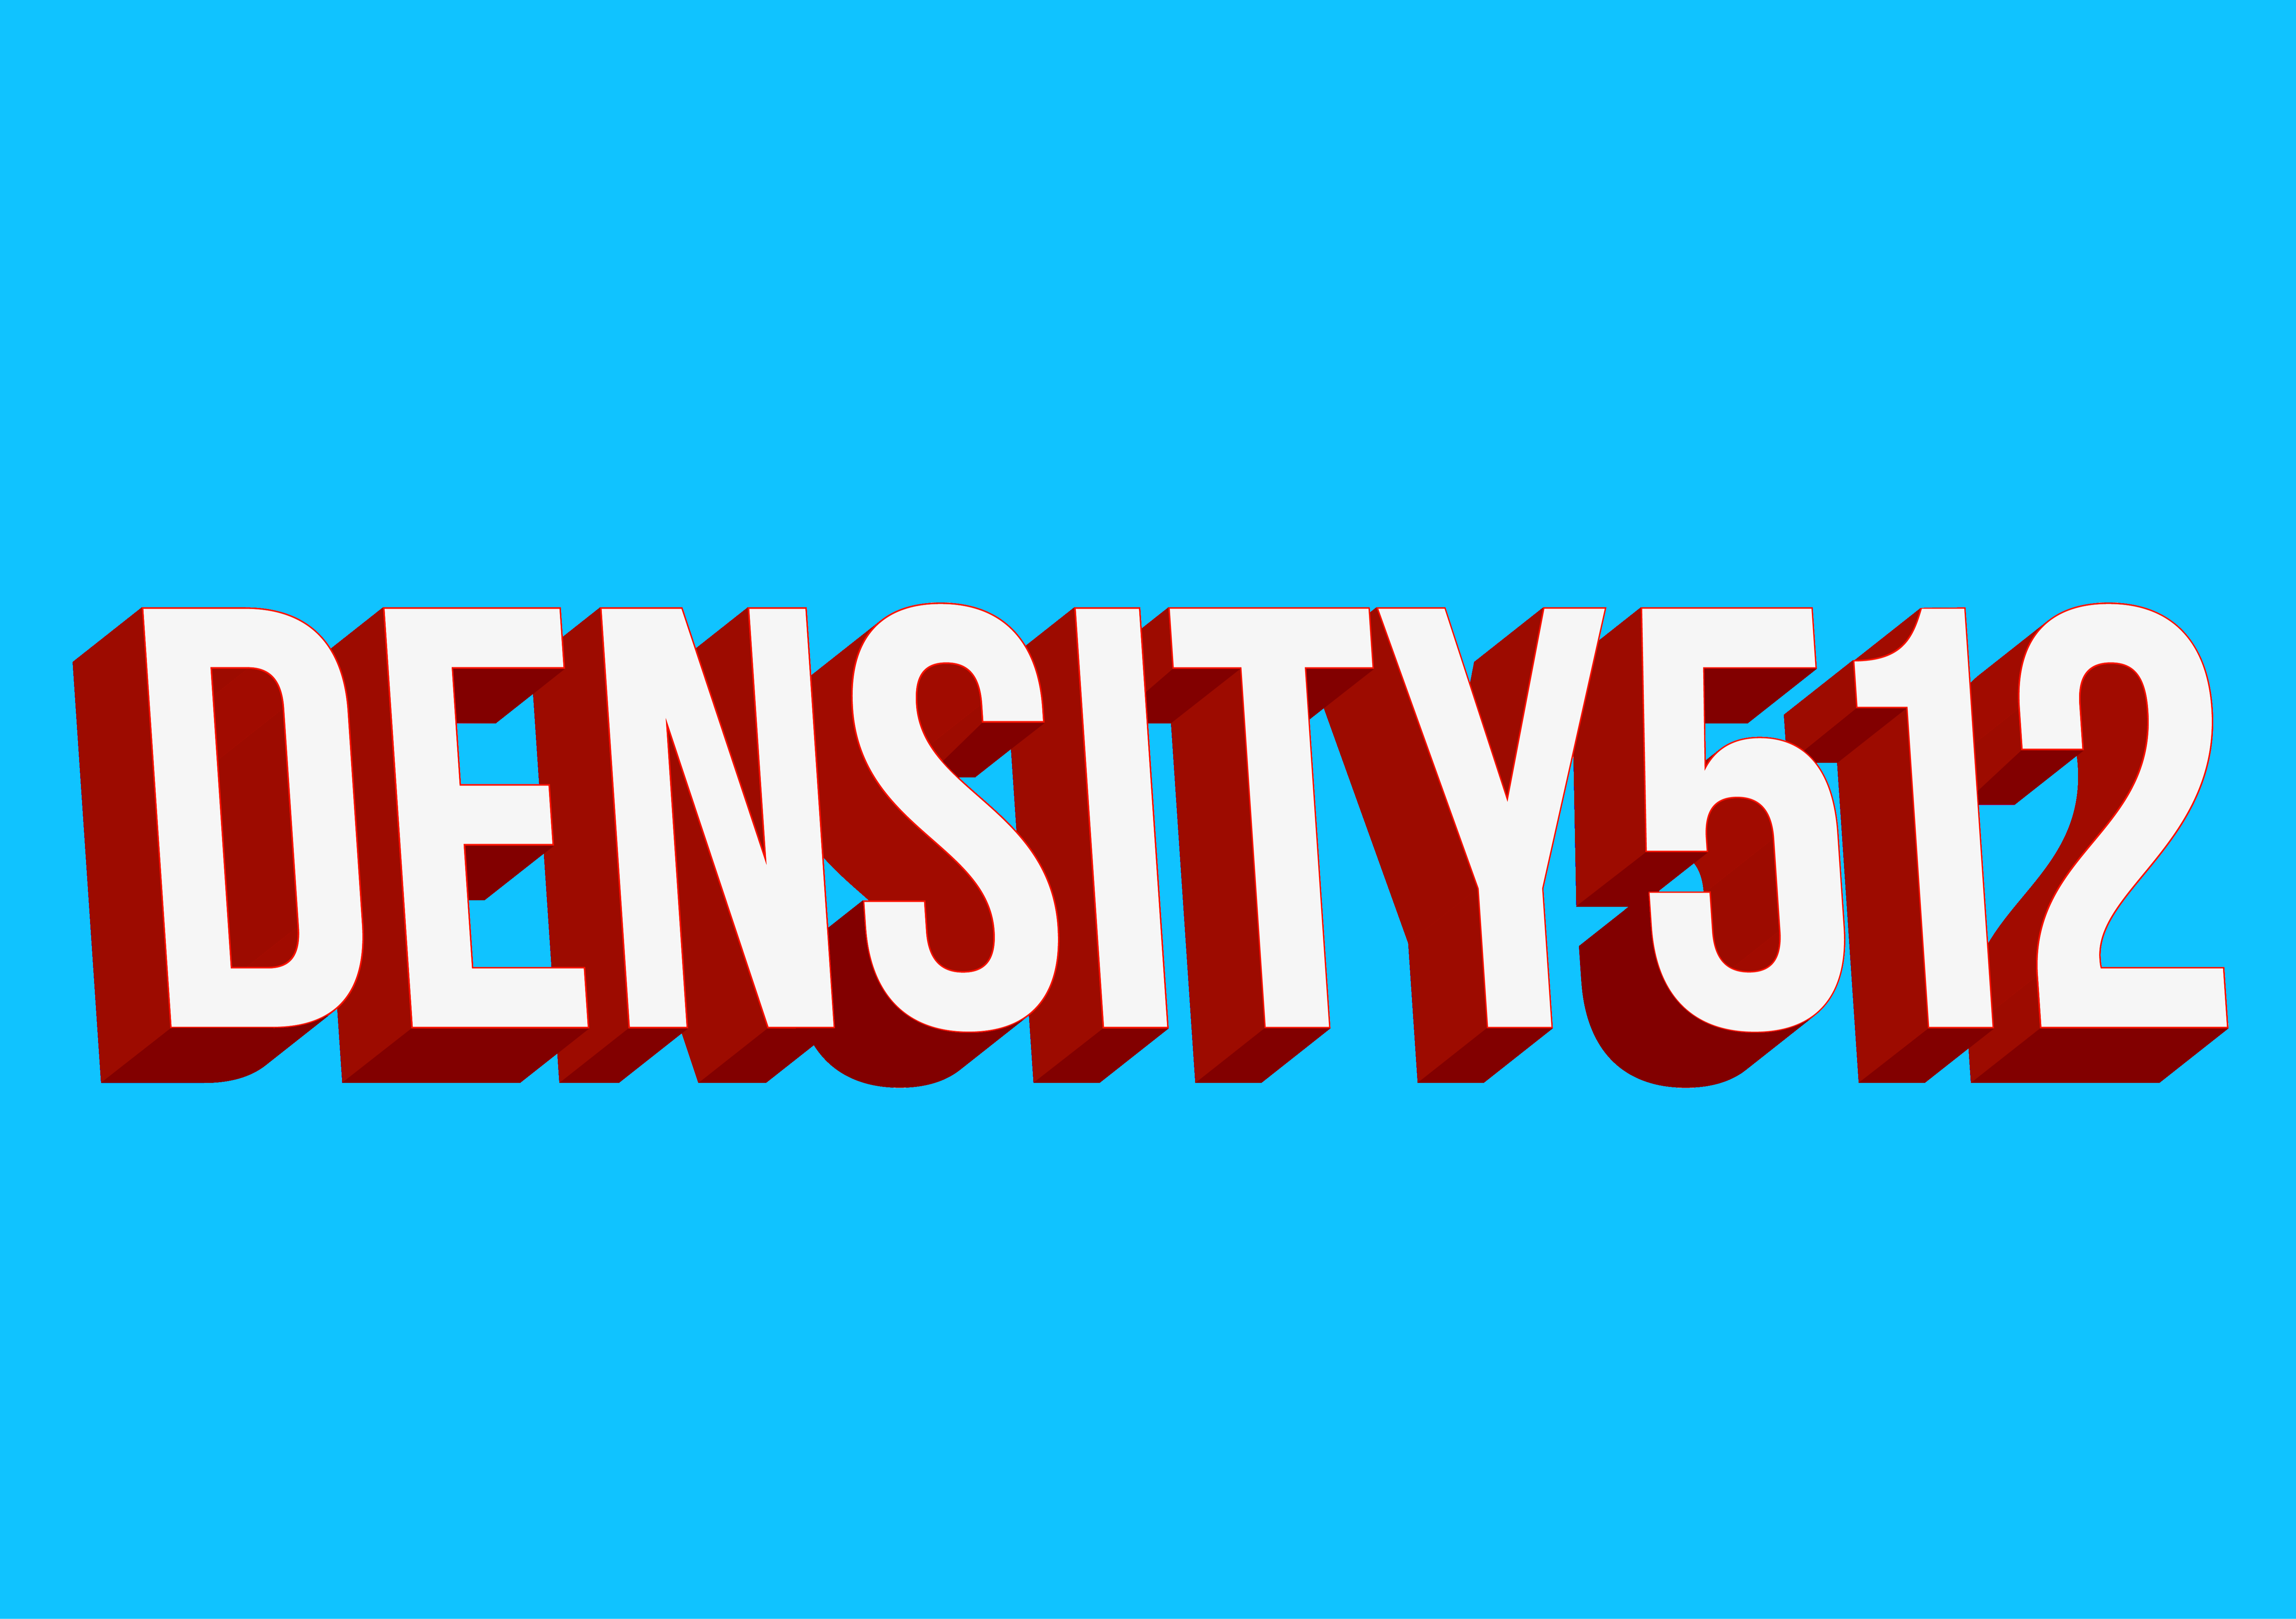 Density512 logo